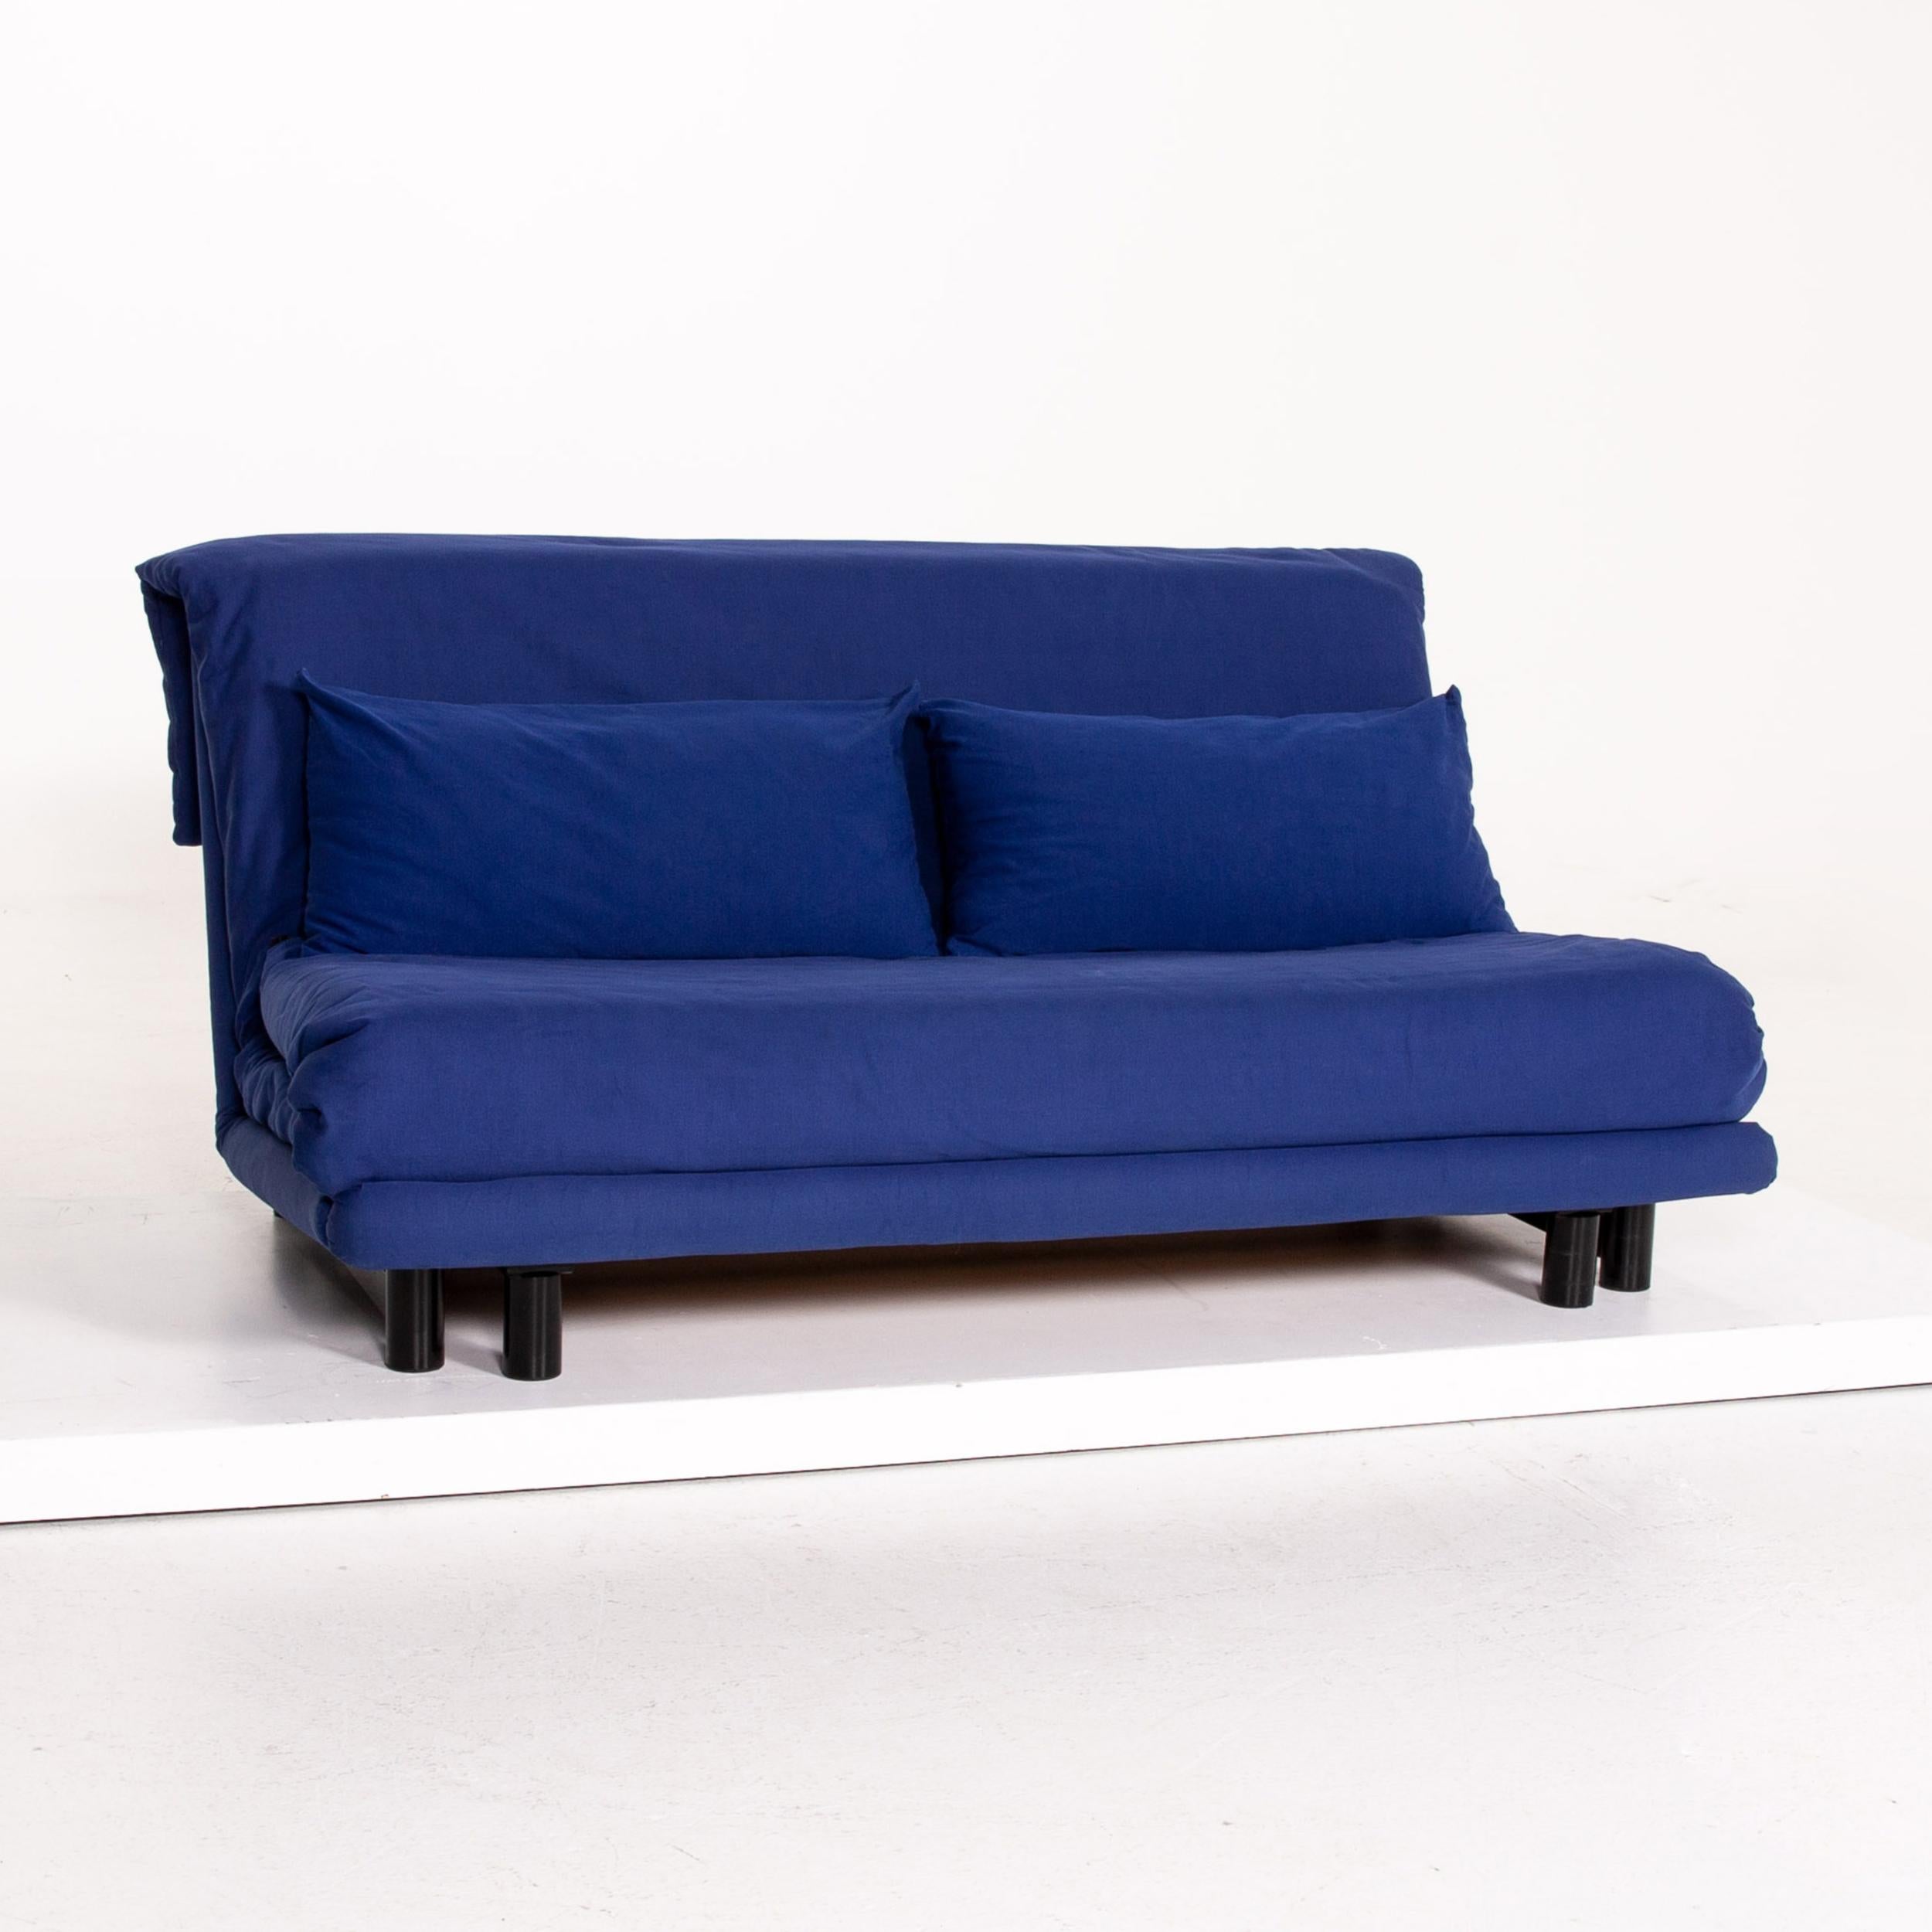 Ligne Roset Multy Fabric Sofa Blue Sleep Function Sofa Bed Couch 2